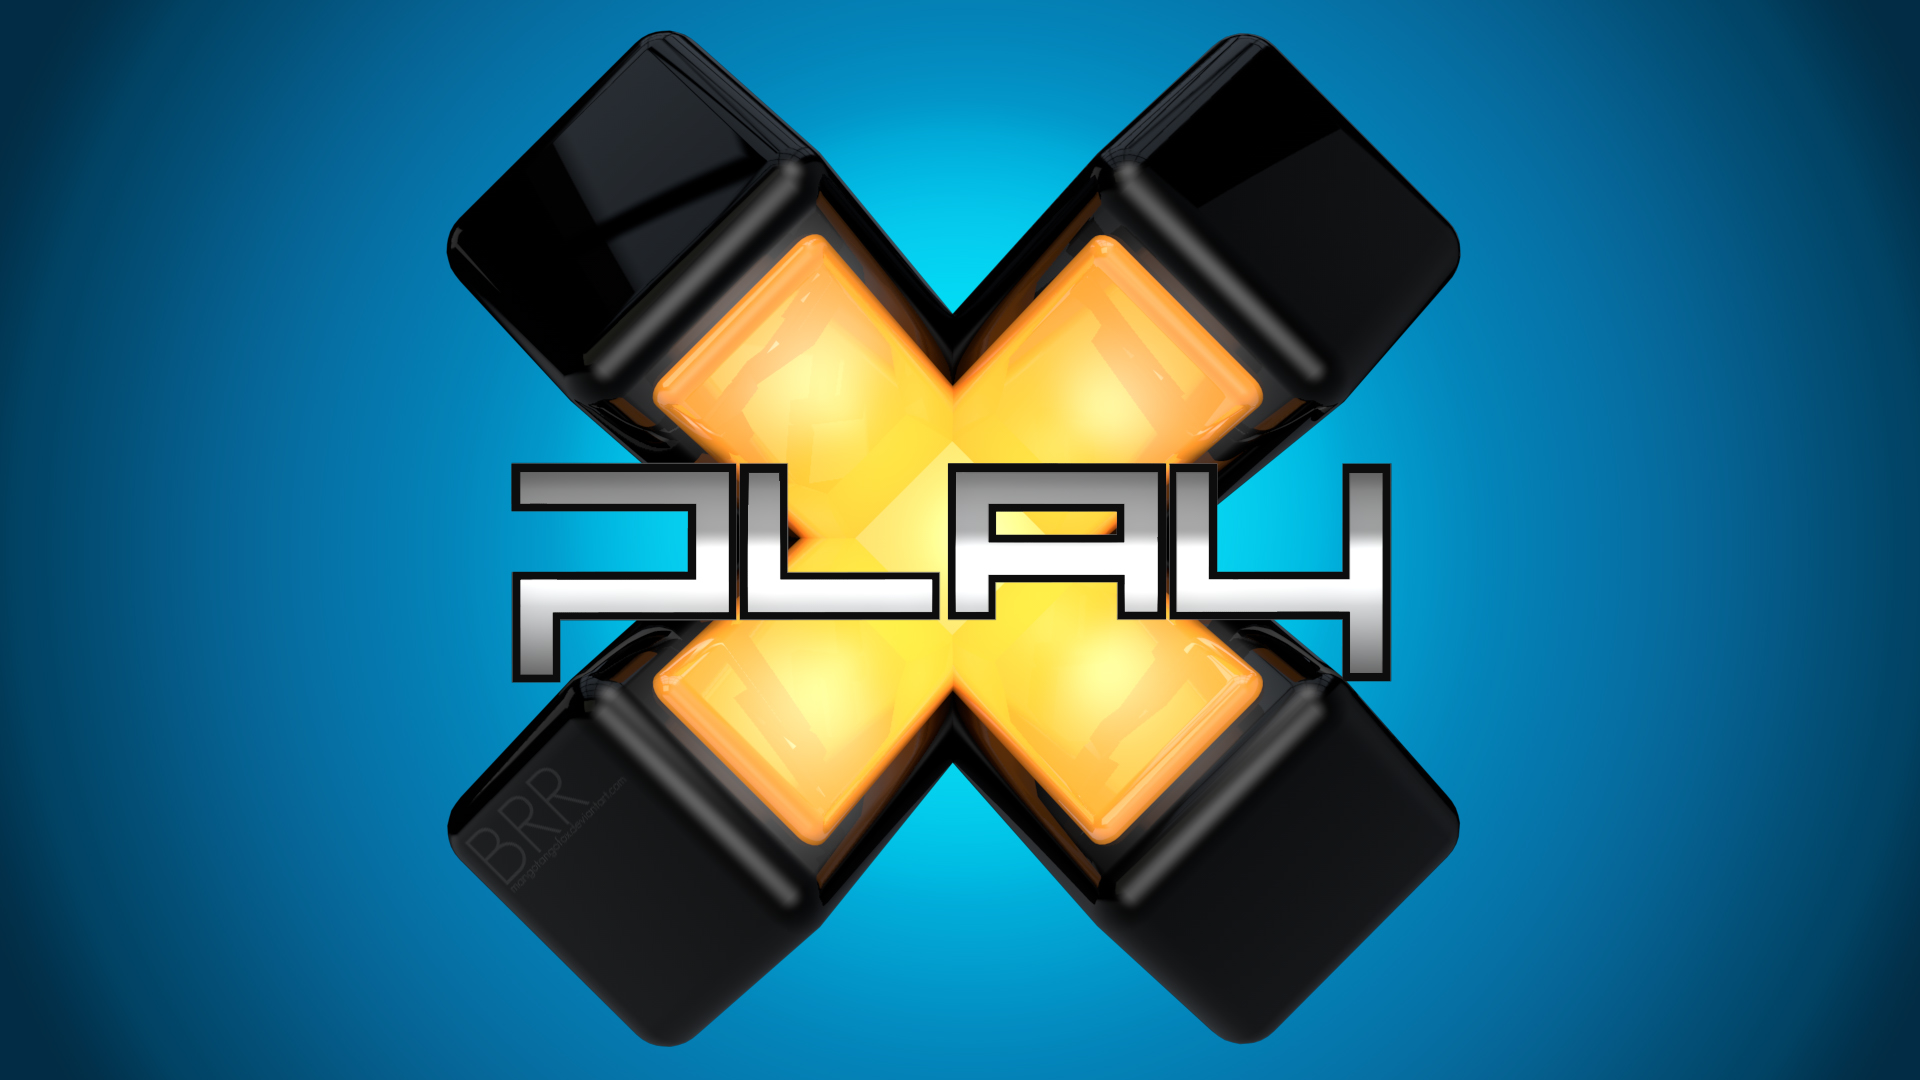 x_play_logo_by_mangotangofox-d35wz59.jpg